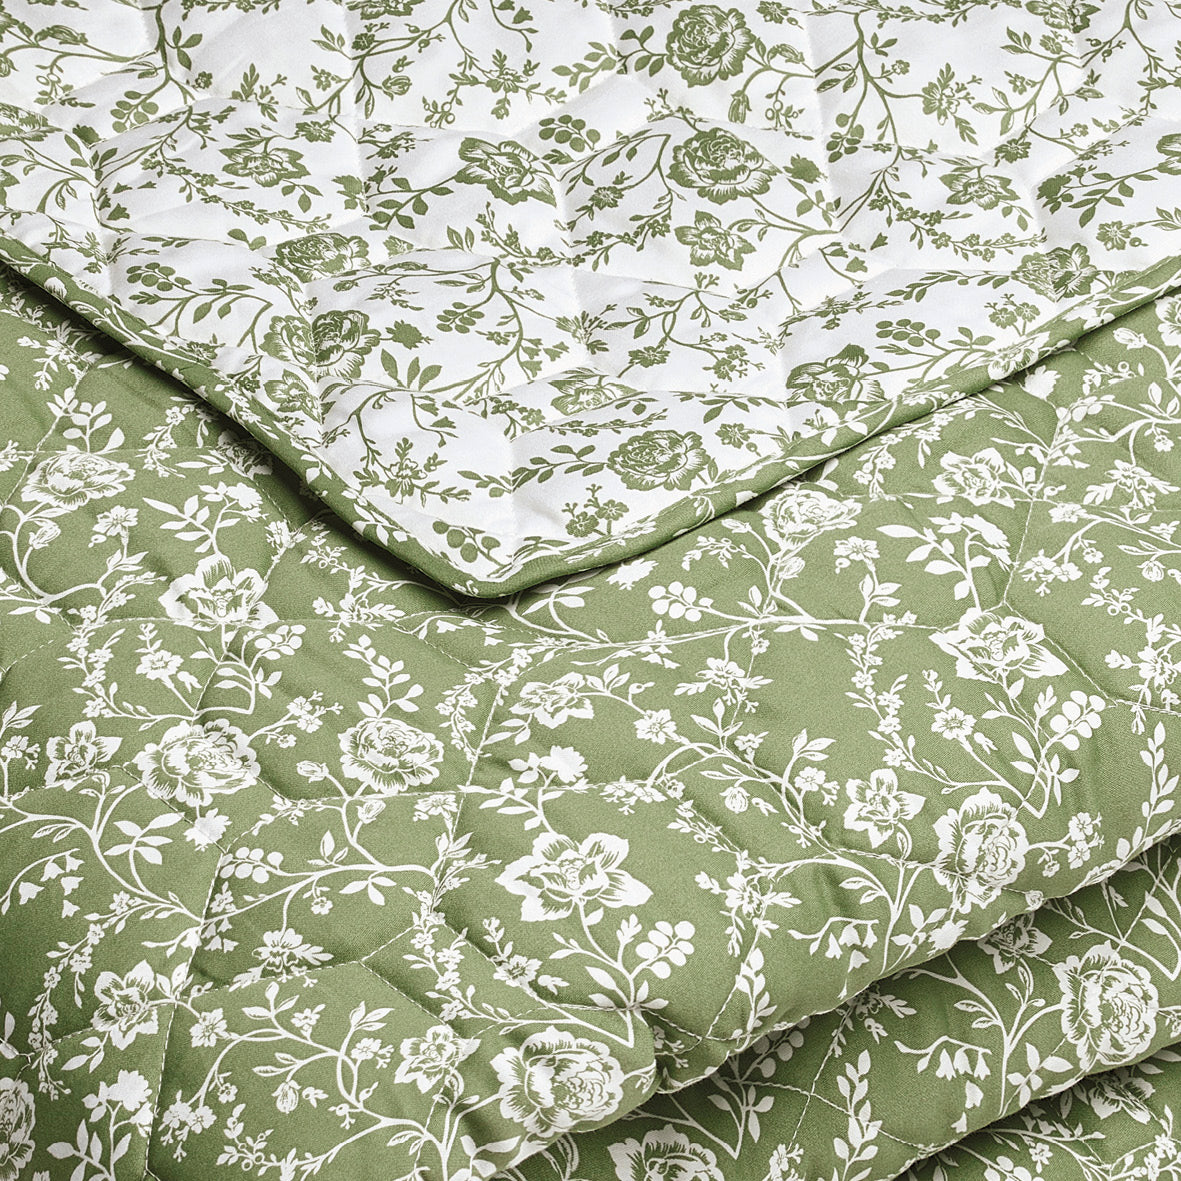 Bedspread - Floraison de Roses white/green